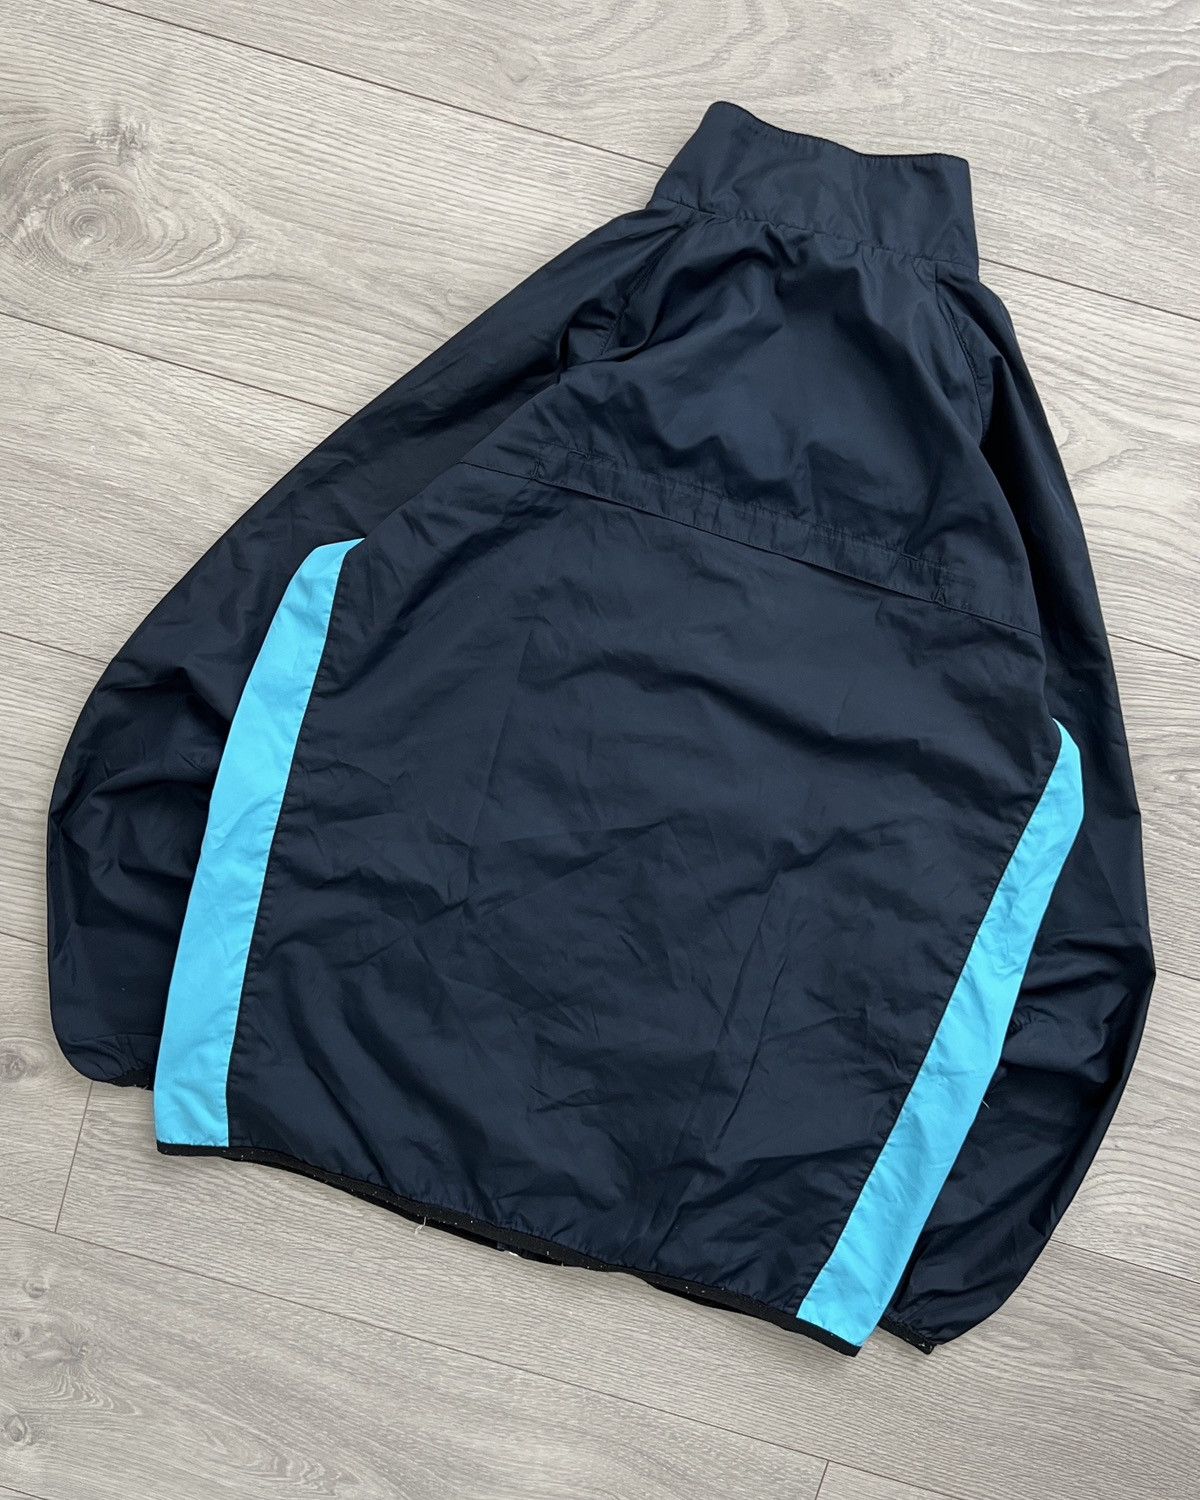 Nike Nike Clima-Fit 00s Panelled Nylon Tech Jacket | Grailed